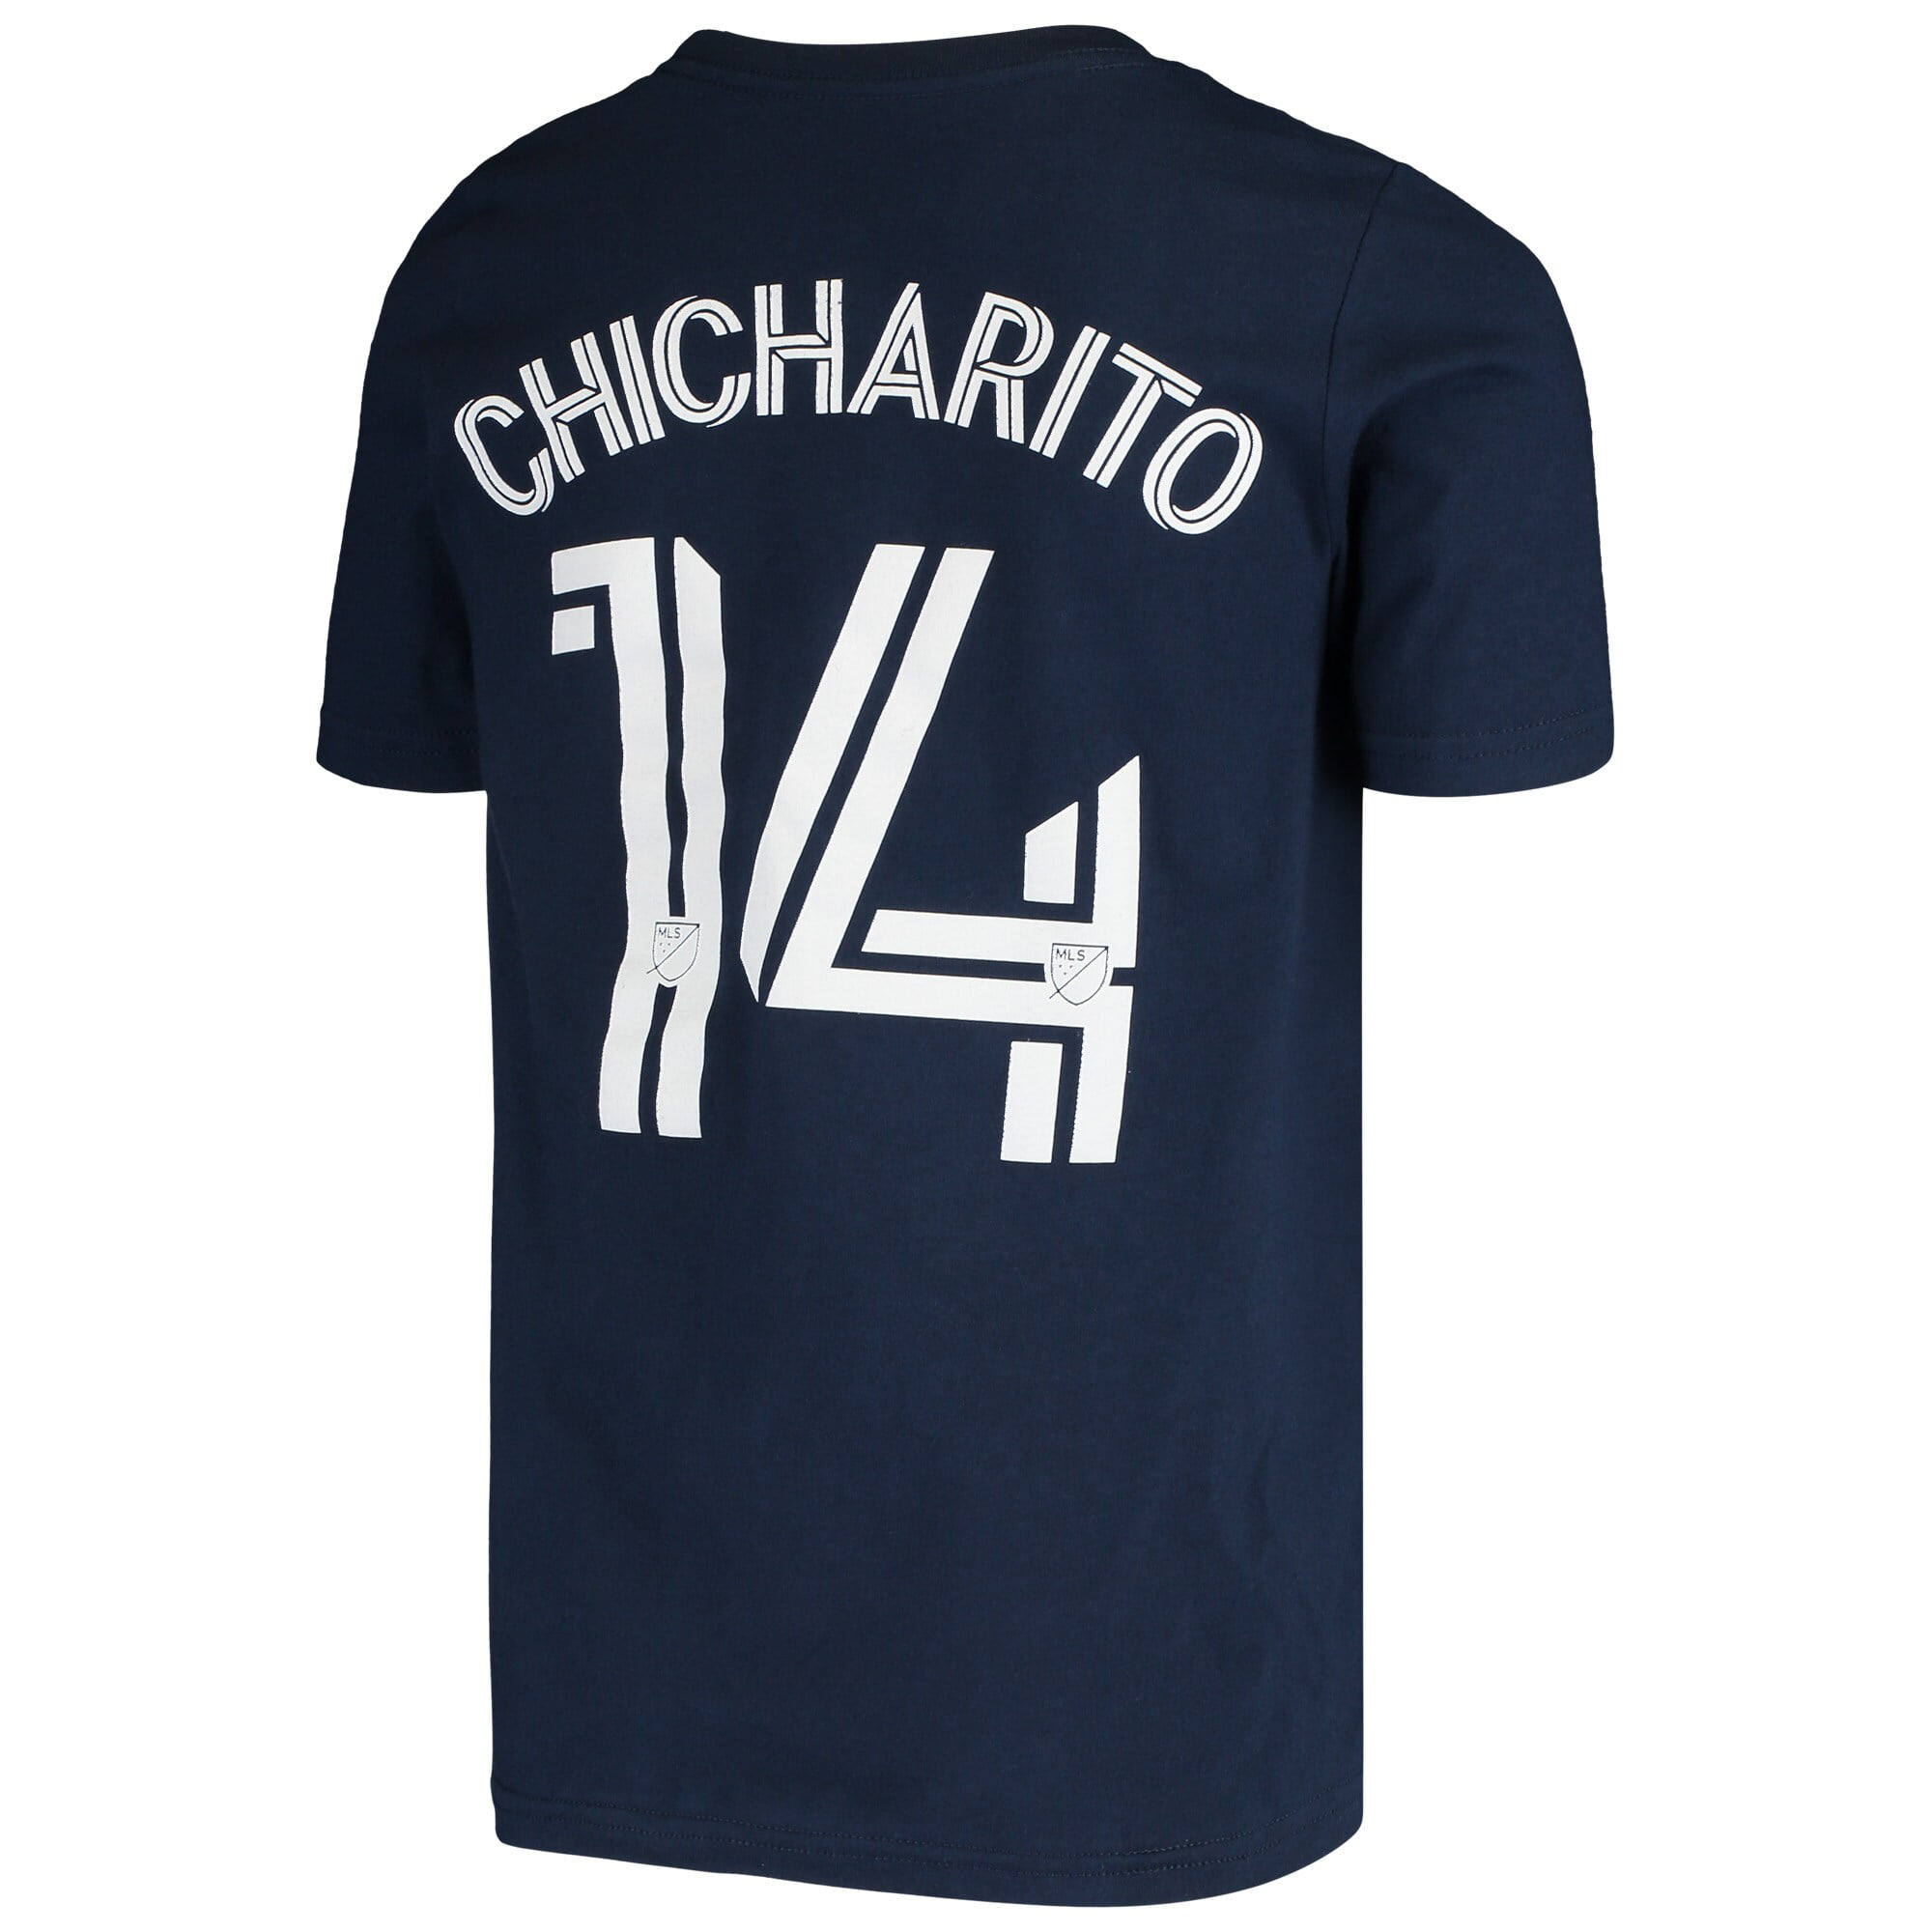 chicharito galaxy shirt